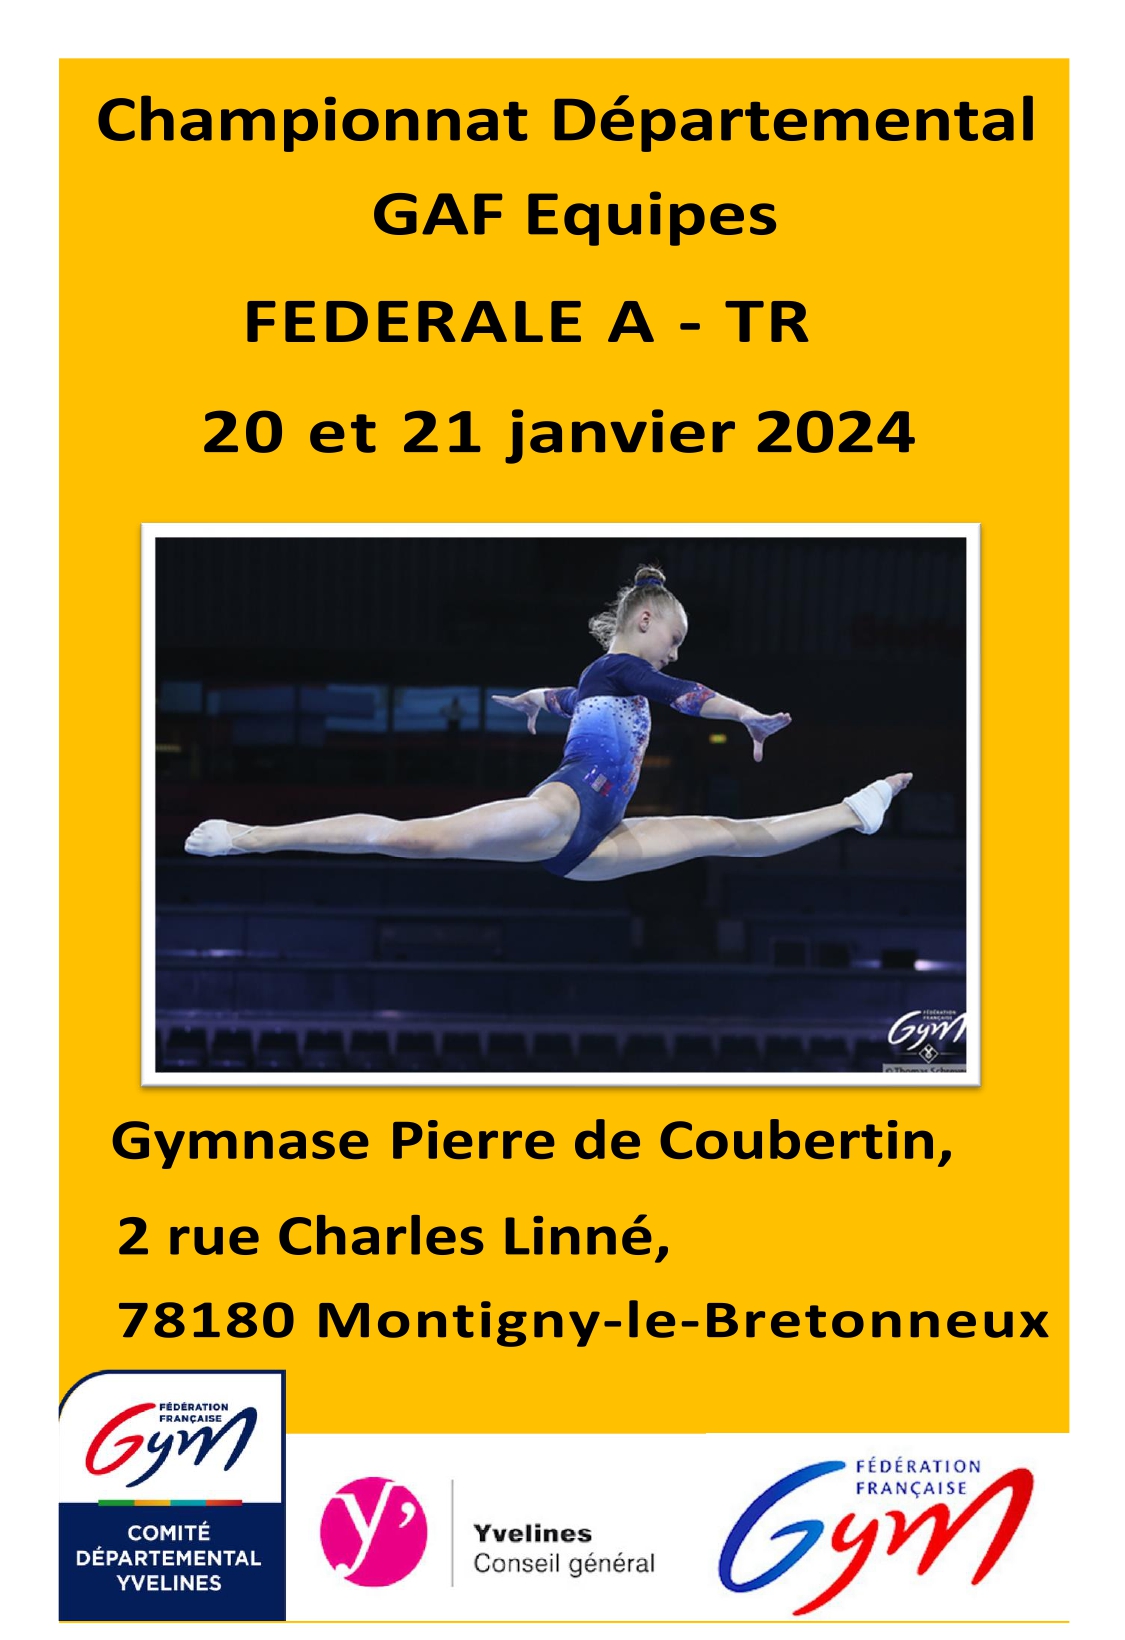 GAF - Organigramme Définitif V3 - Equipe FED A/TR - 20/21 janvier 2024 à Montigny